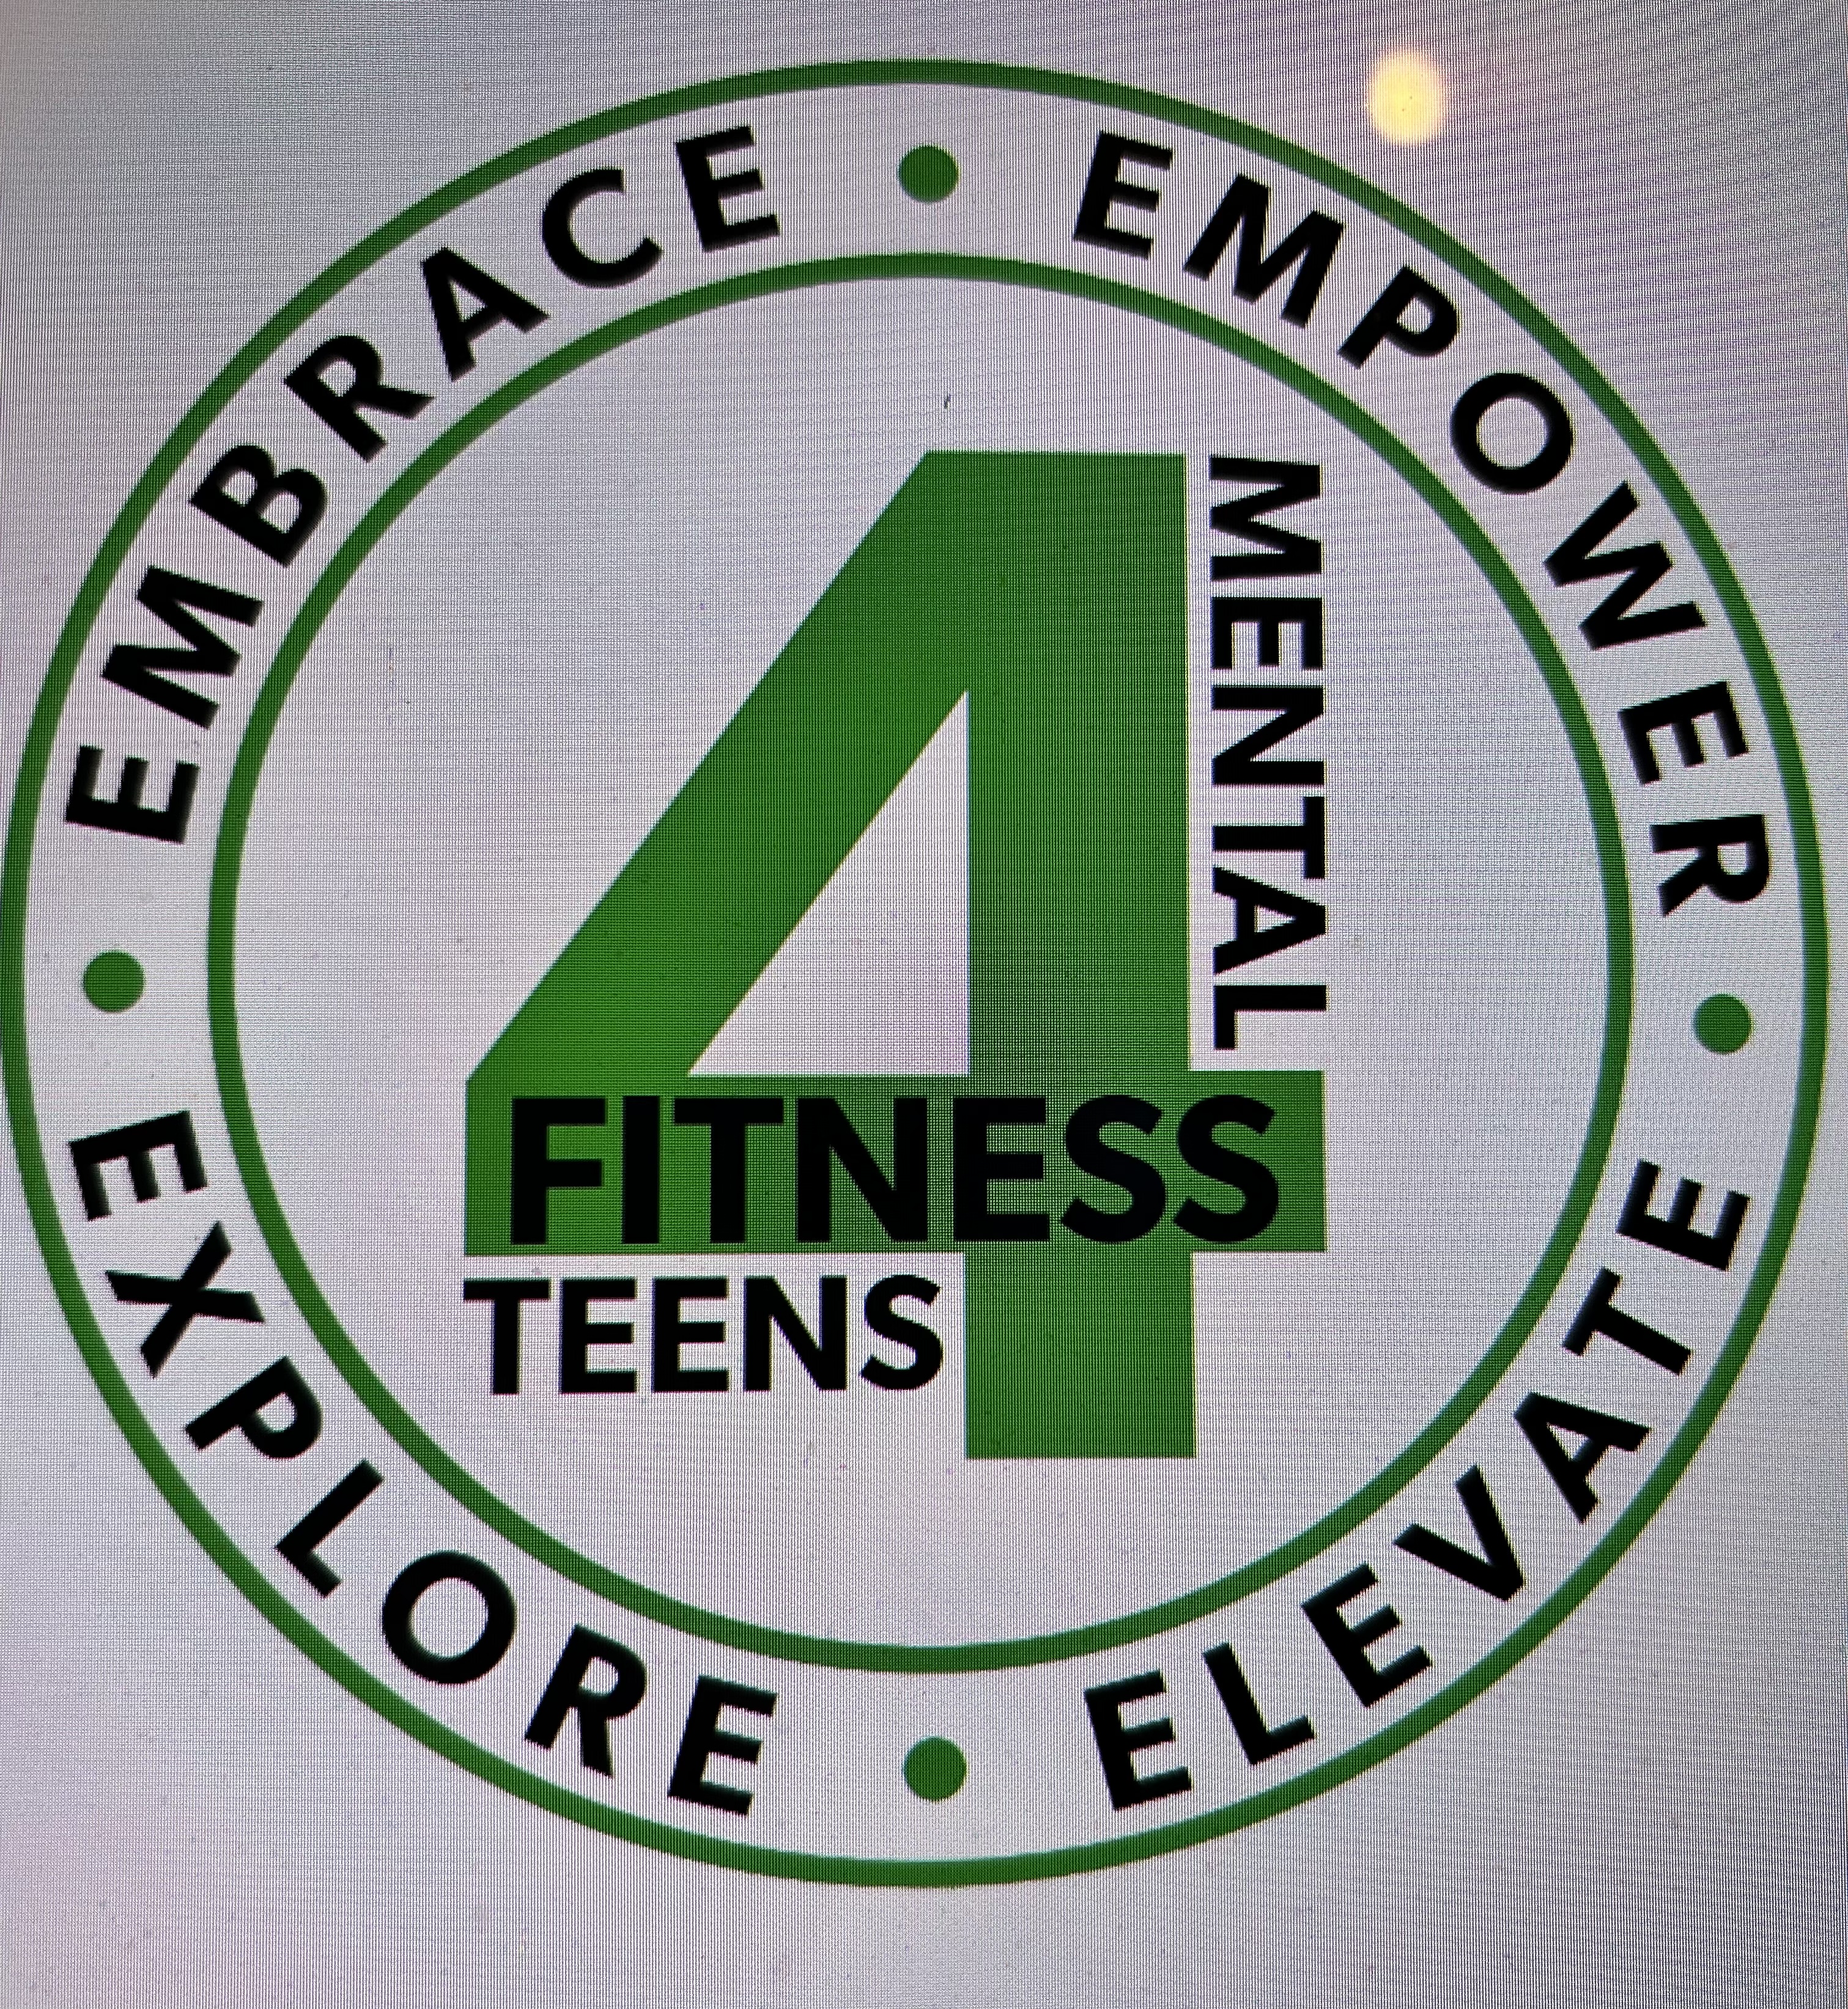 Mental fitness 4 Teens